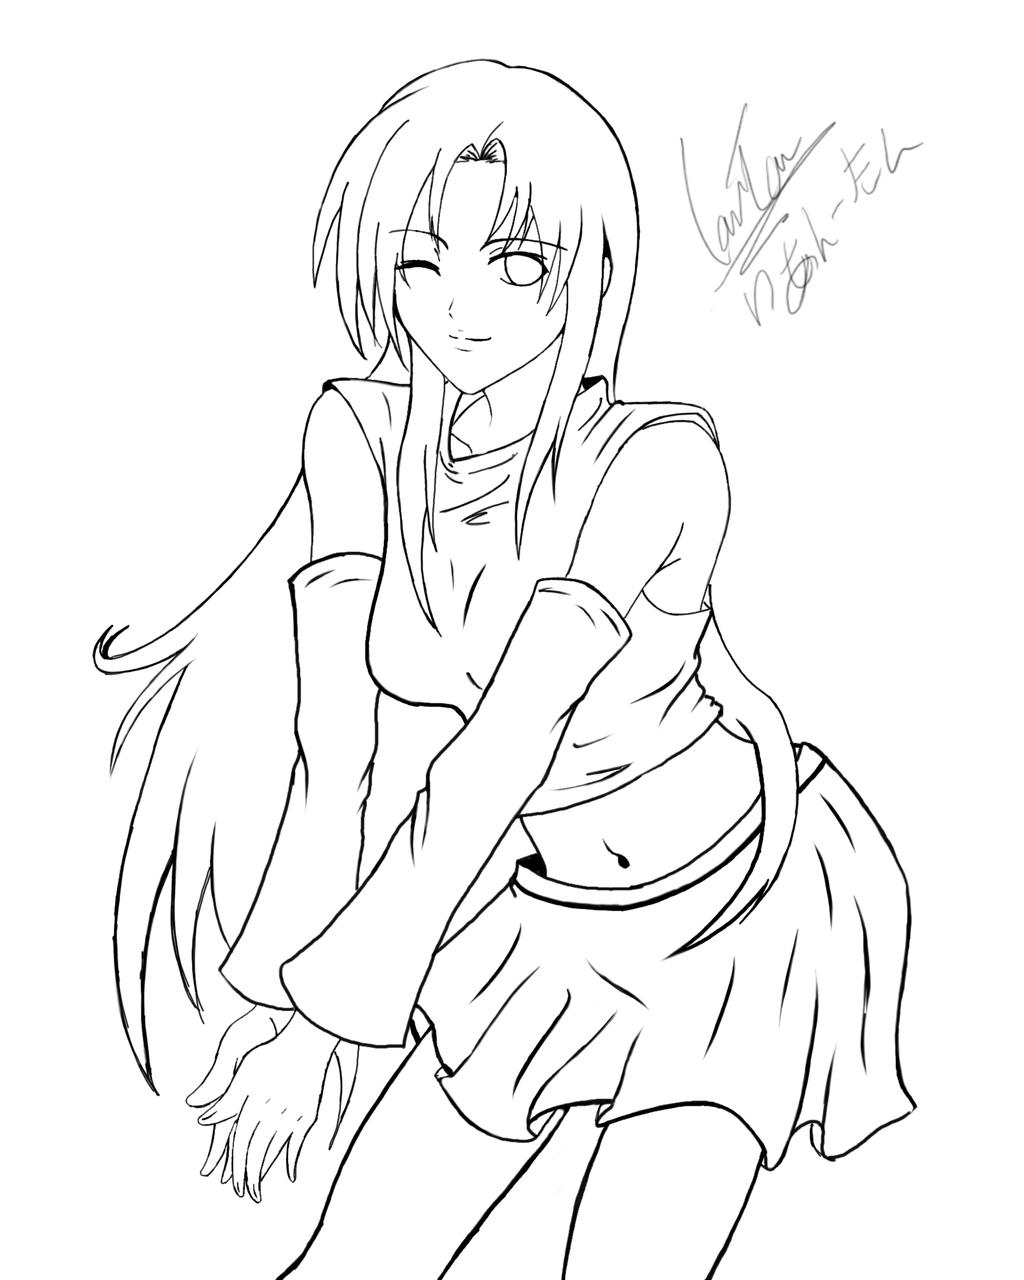 Anime Girl drawing Line Art by kusanagi91 on DeviantArt